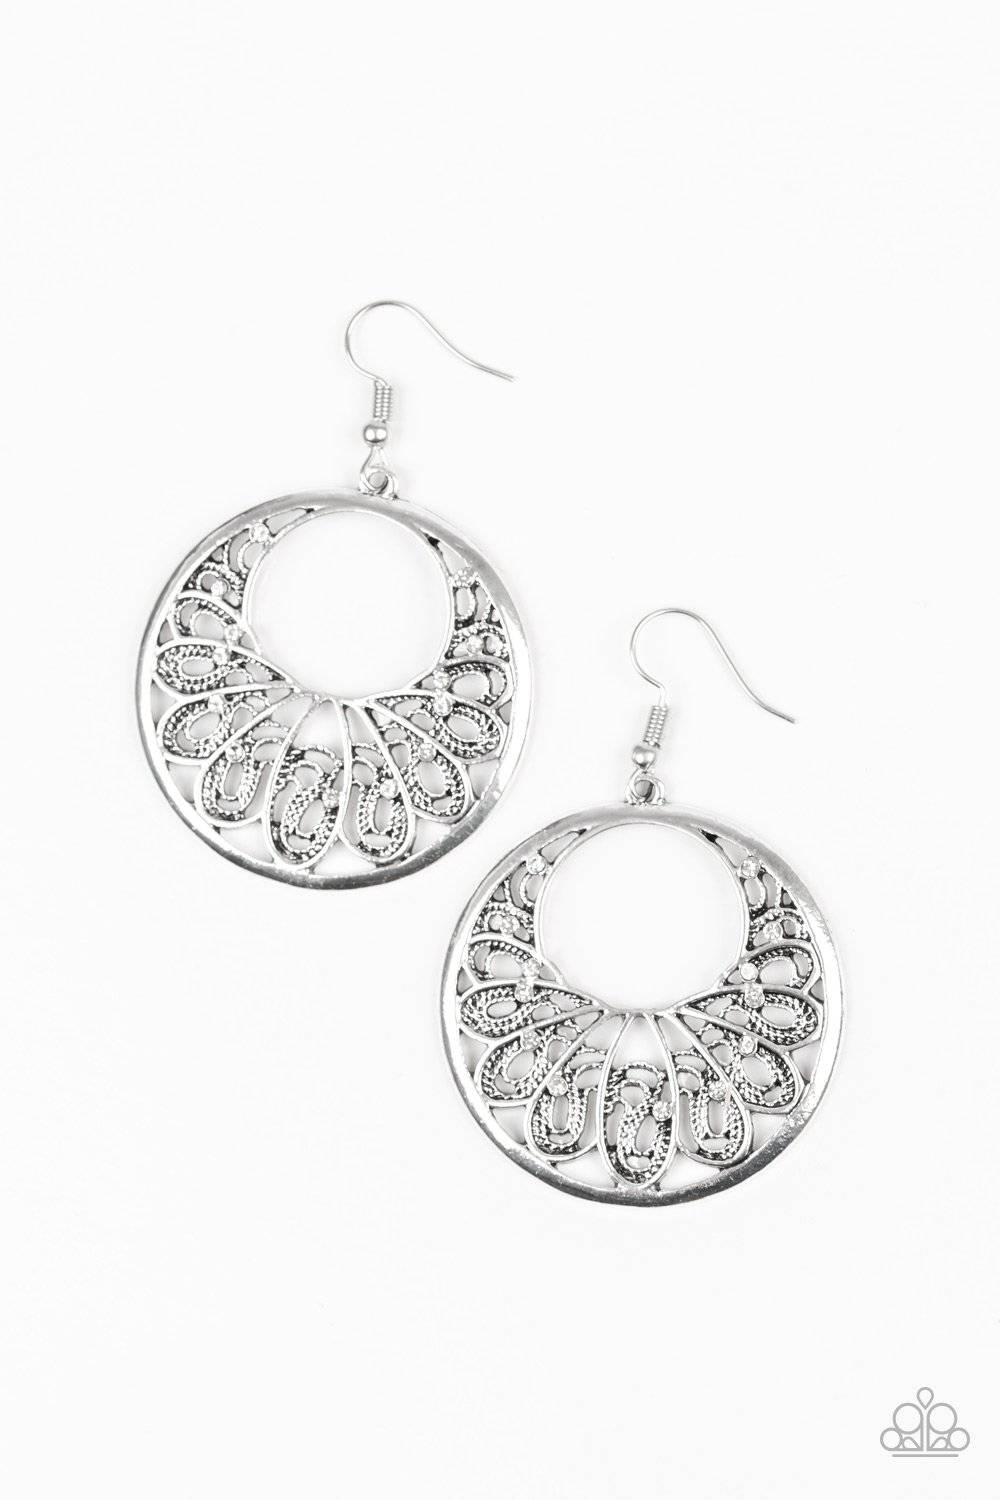 Fancy That - White Rhinestone Earrings - Paparazzi Accessories - GlaMarous Titi Jewels